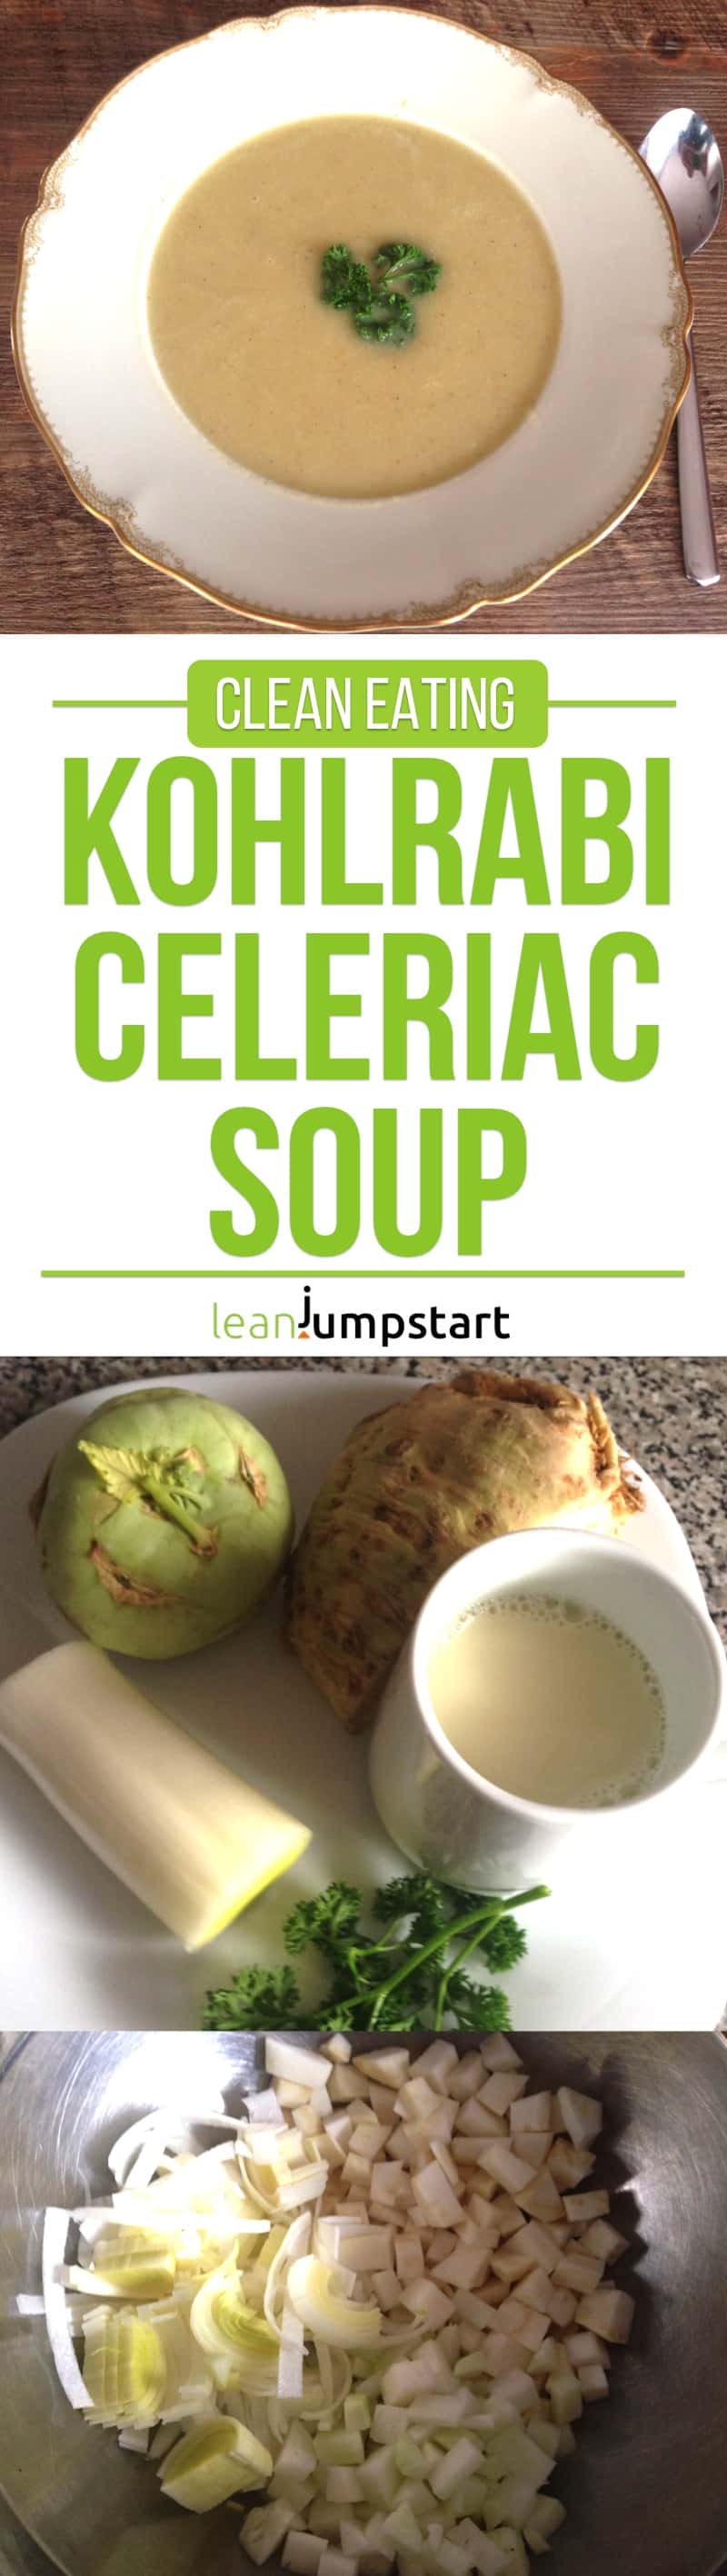 kohlrabi celeriac soup recipe: easy, yummy and clean